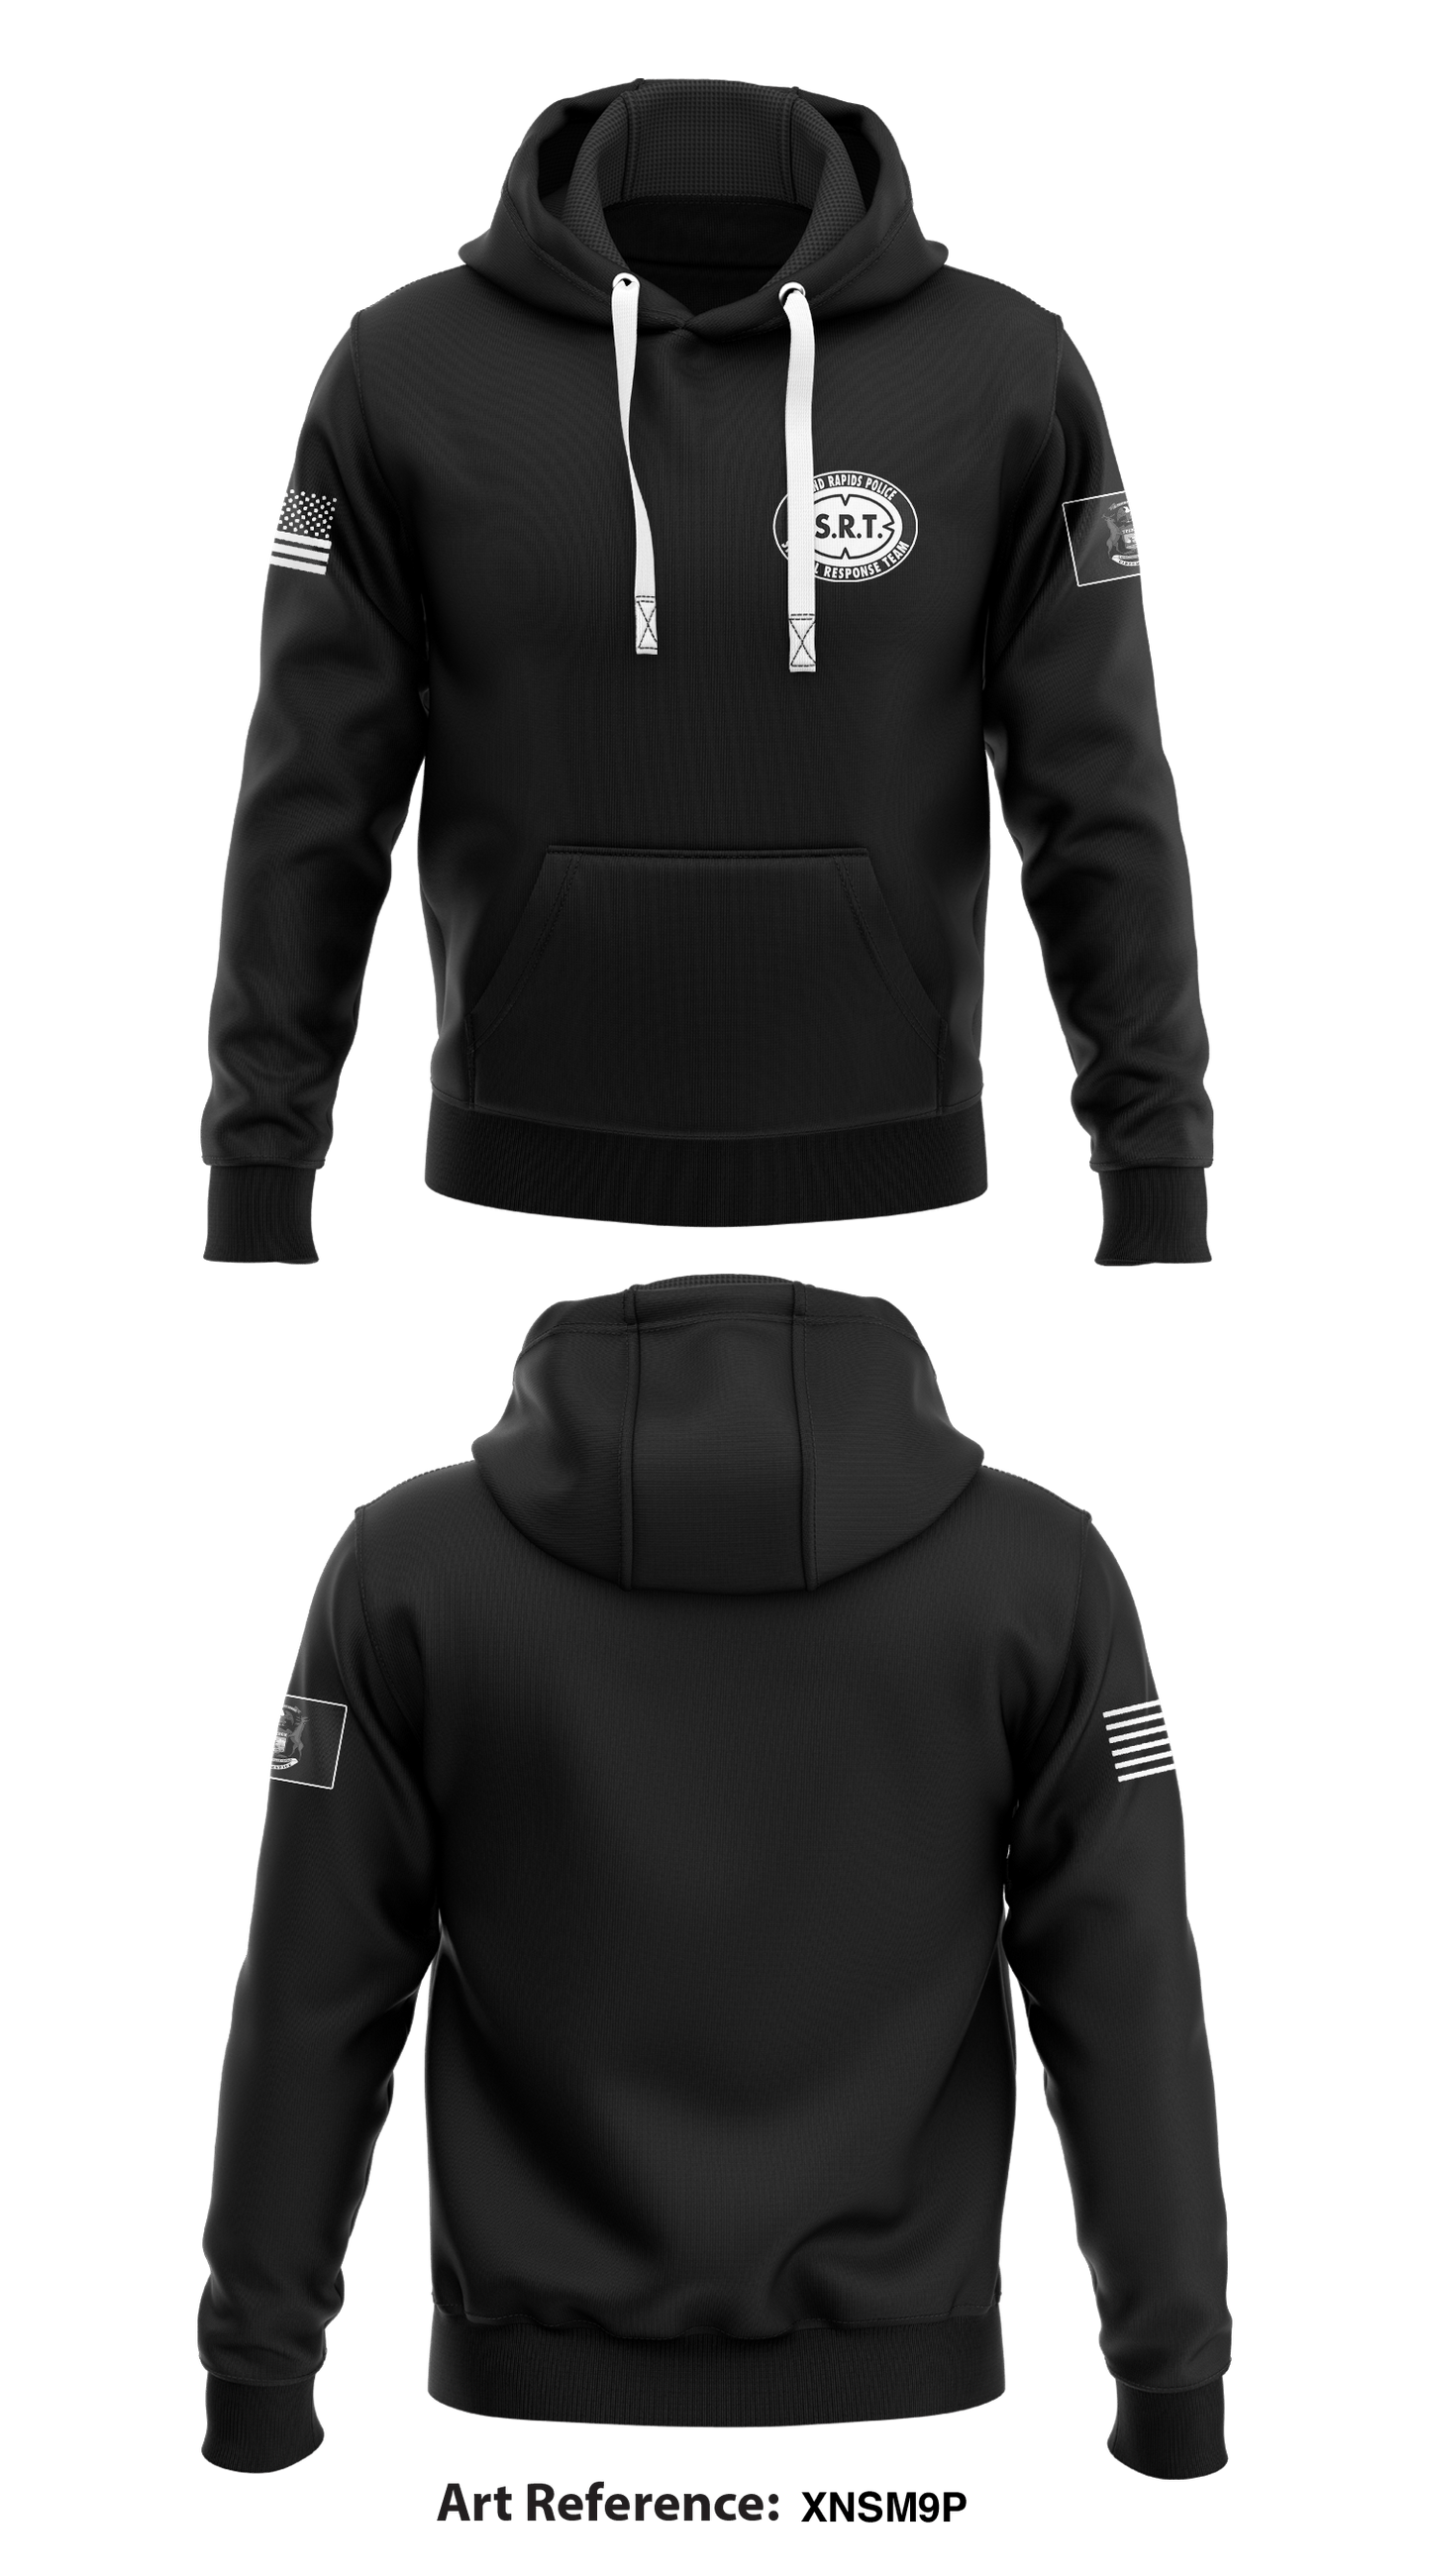 Grand Rapids Police Special Response Team Store 1  Core Men's Hooded Performance Sweatshirt - XnSm9p